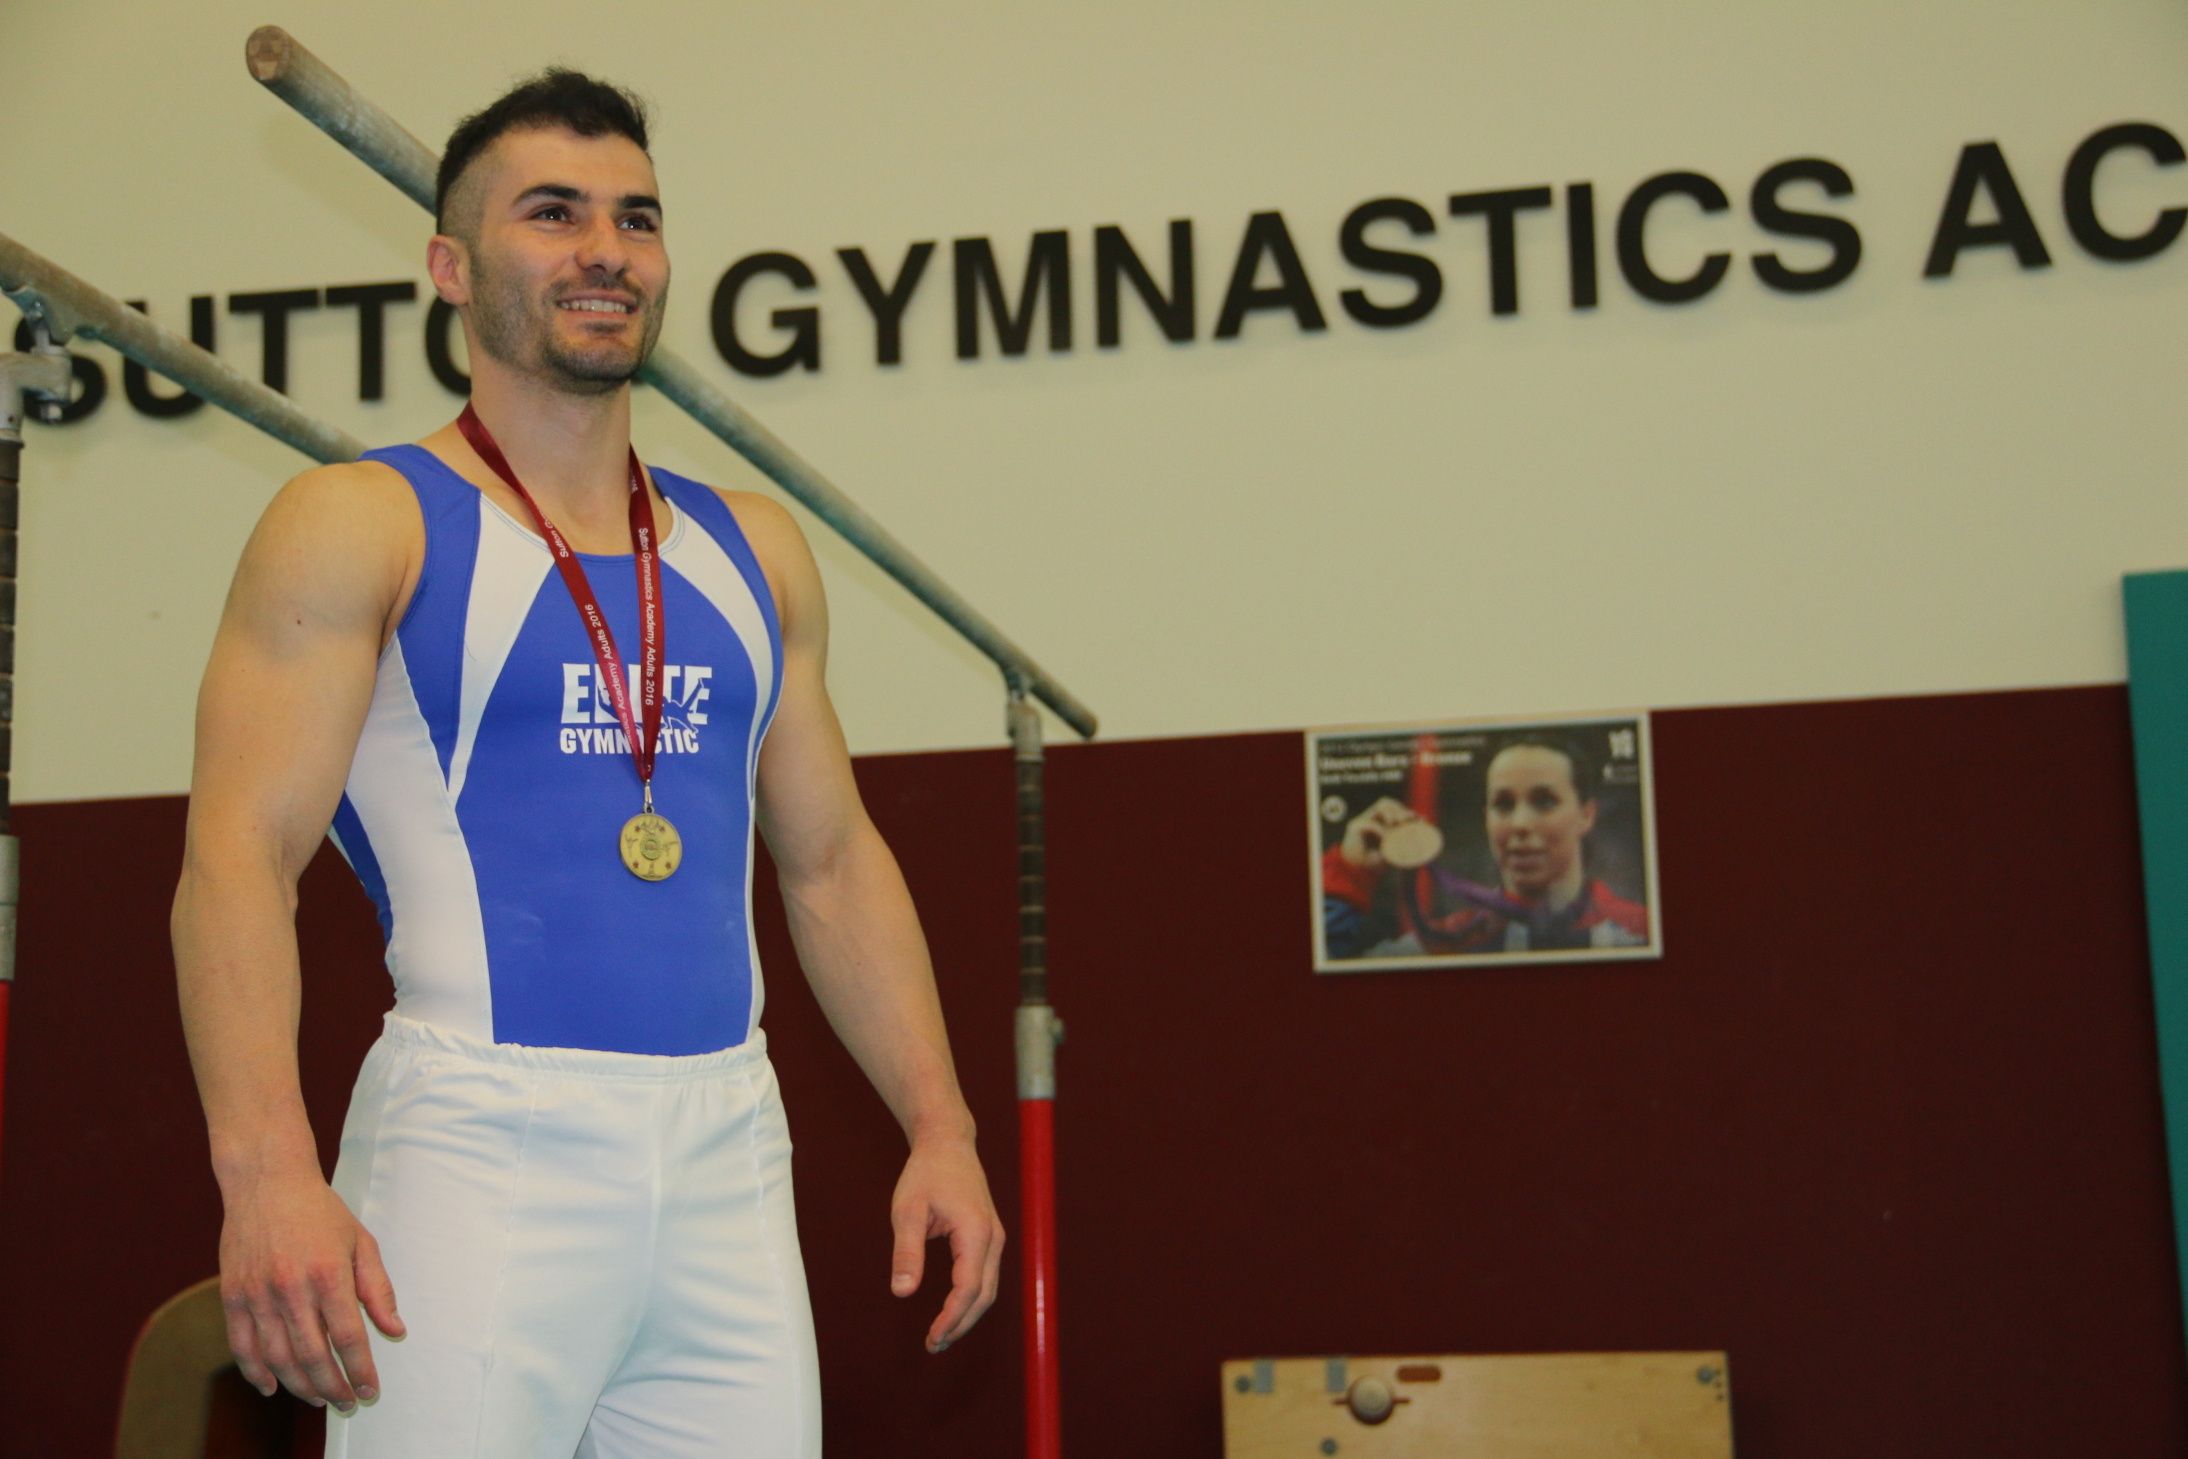 2016 Sutton Gymnastics Academy Rings Champion